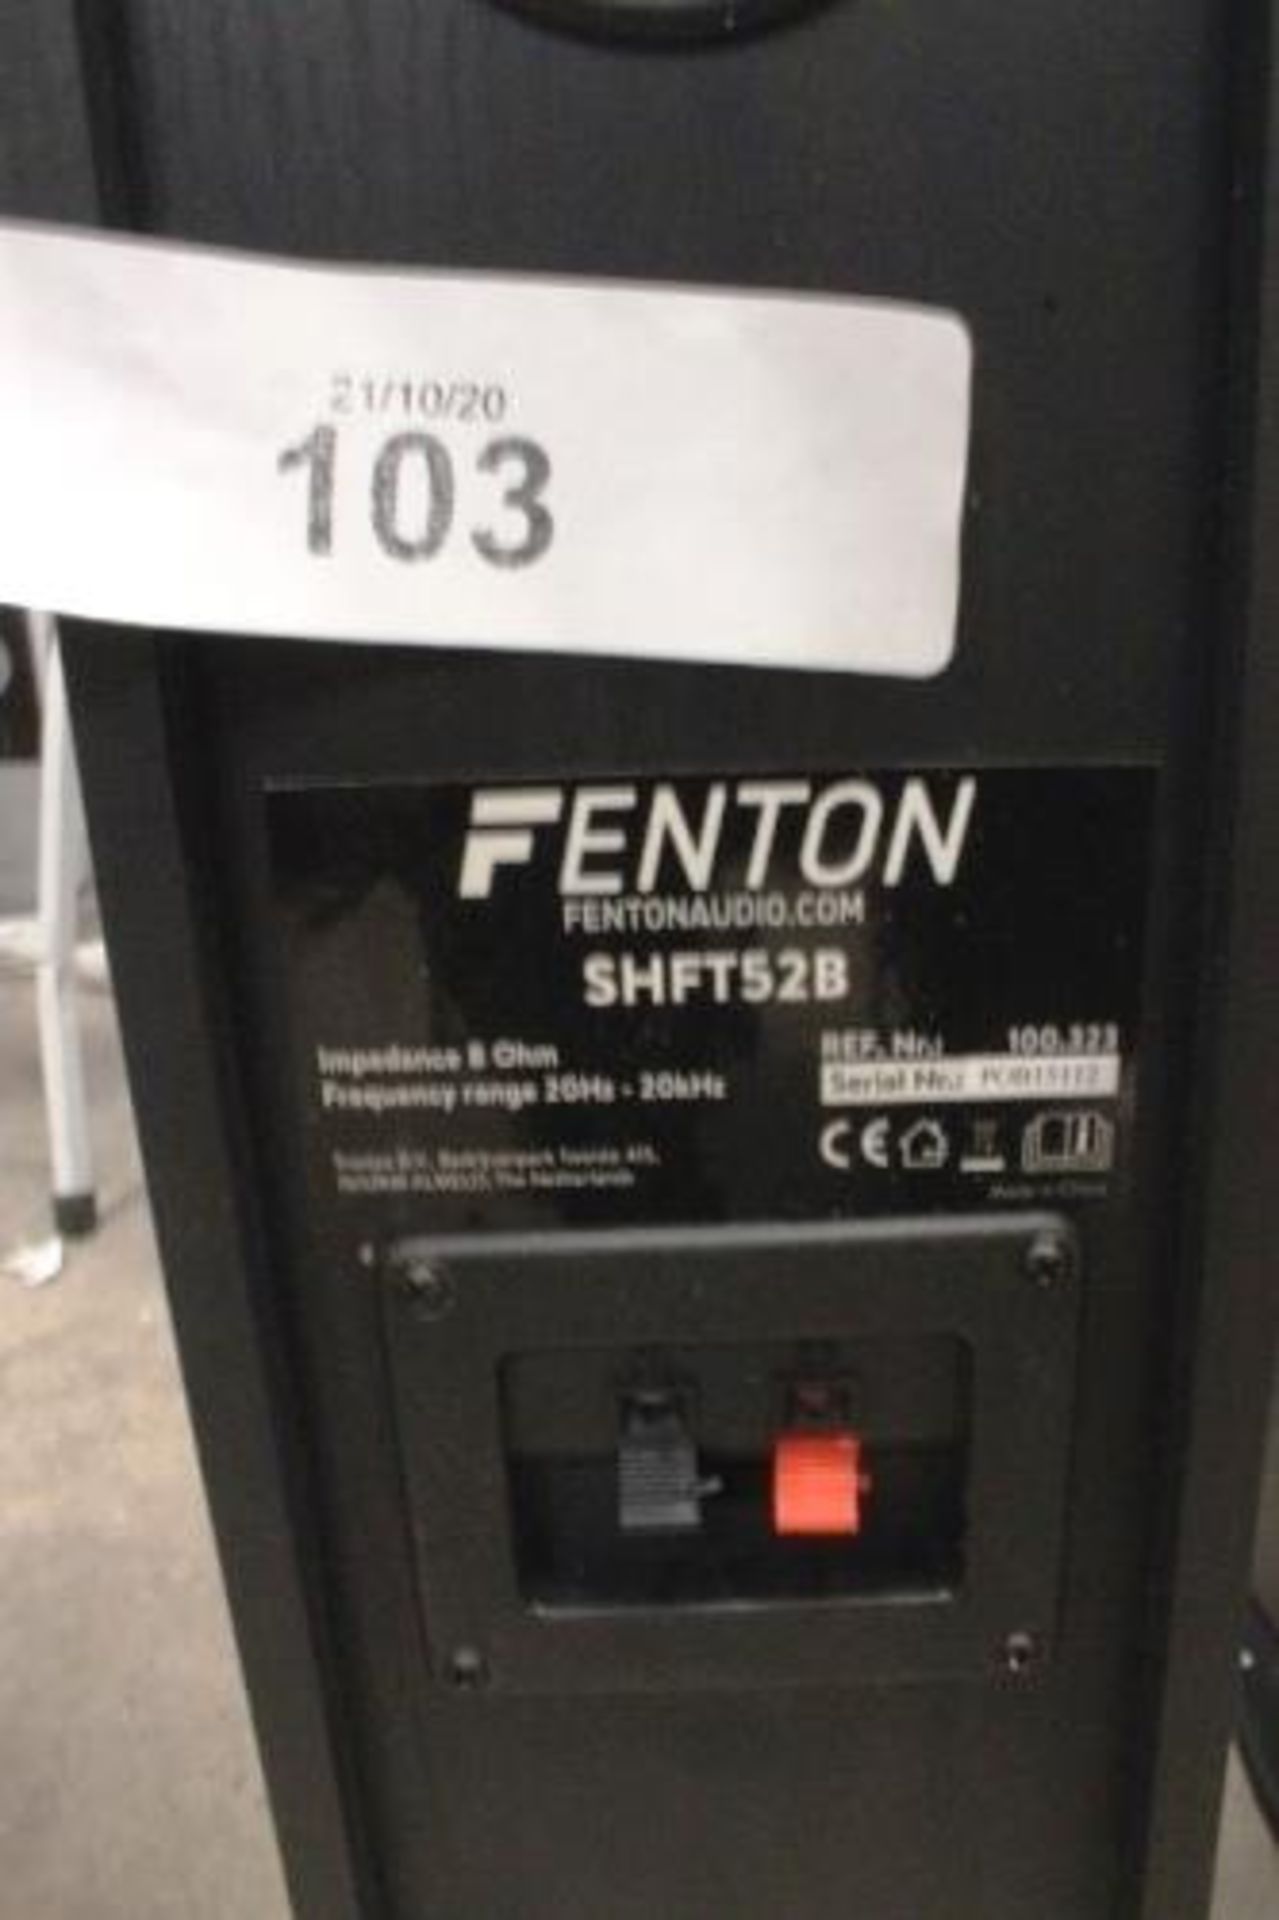 Fenton black tower speaker set, 500W max, model SHFT52B - New in box (ES8) - Image 3 of 4